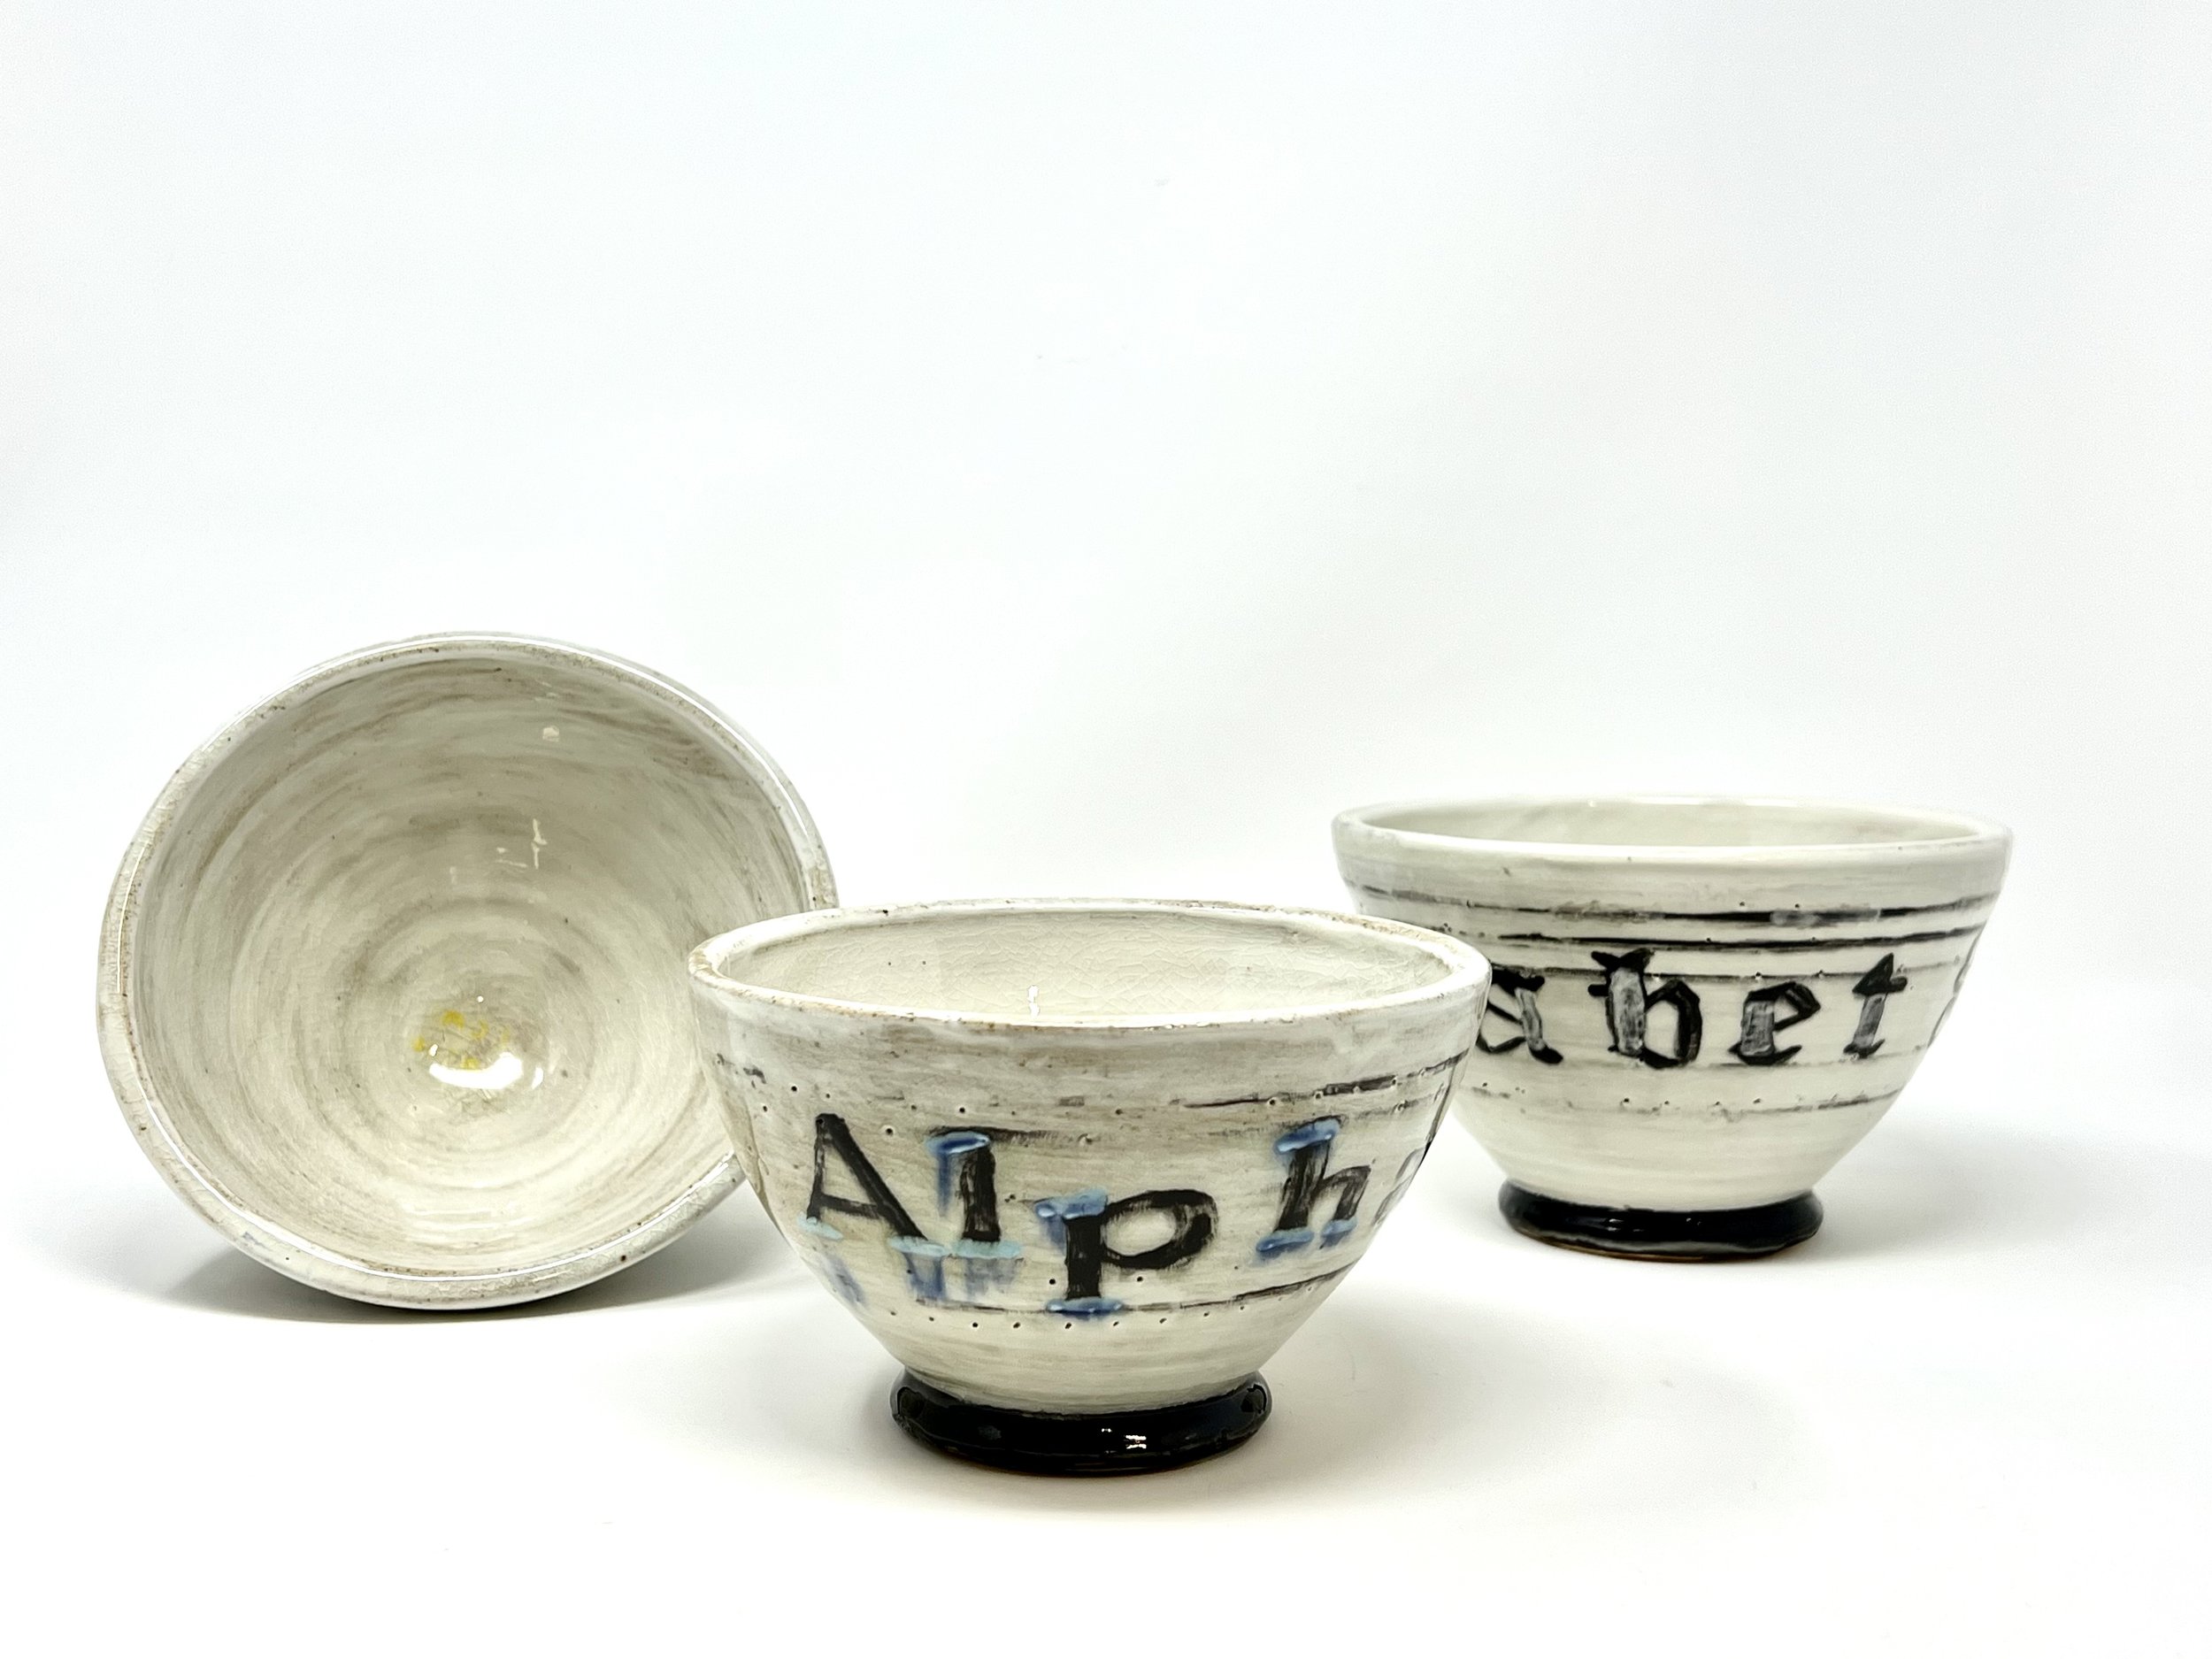 Wheel-thrown bowls